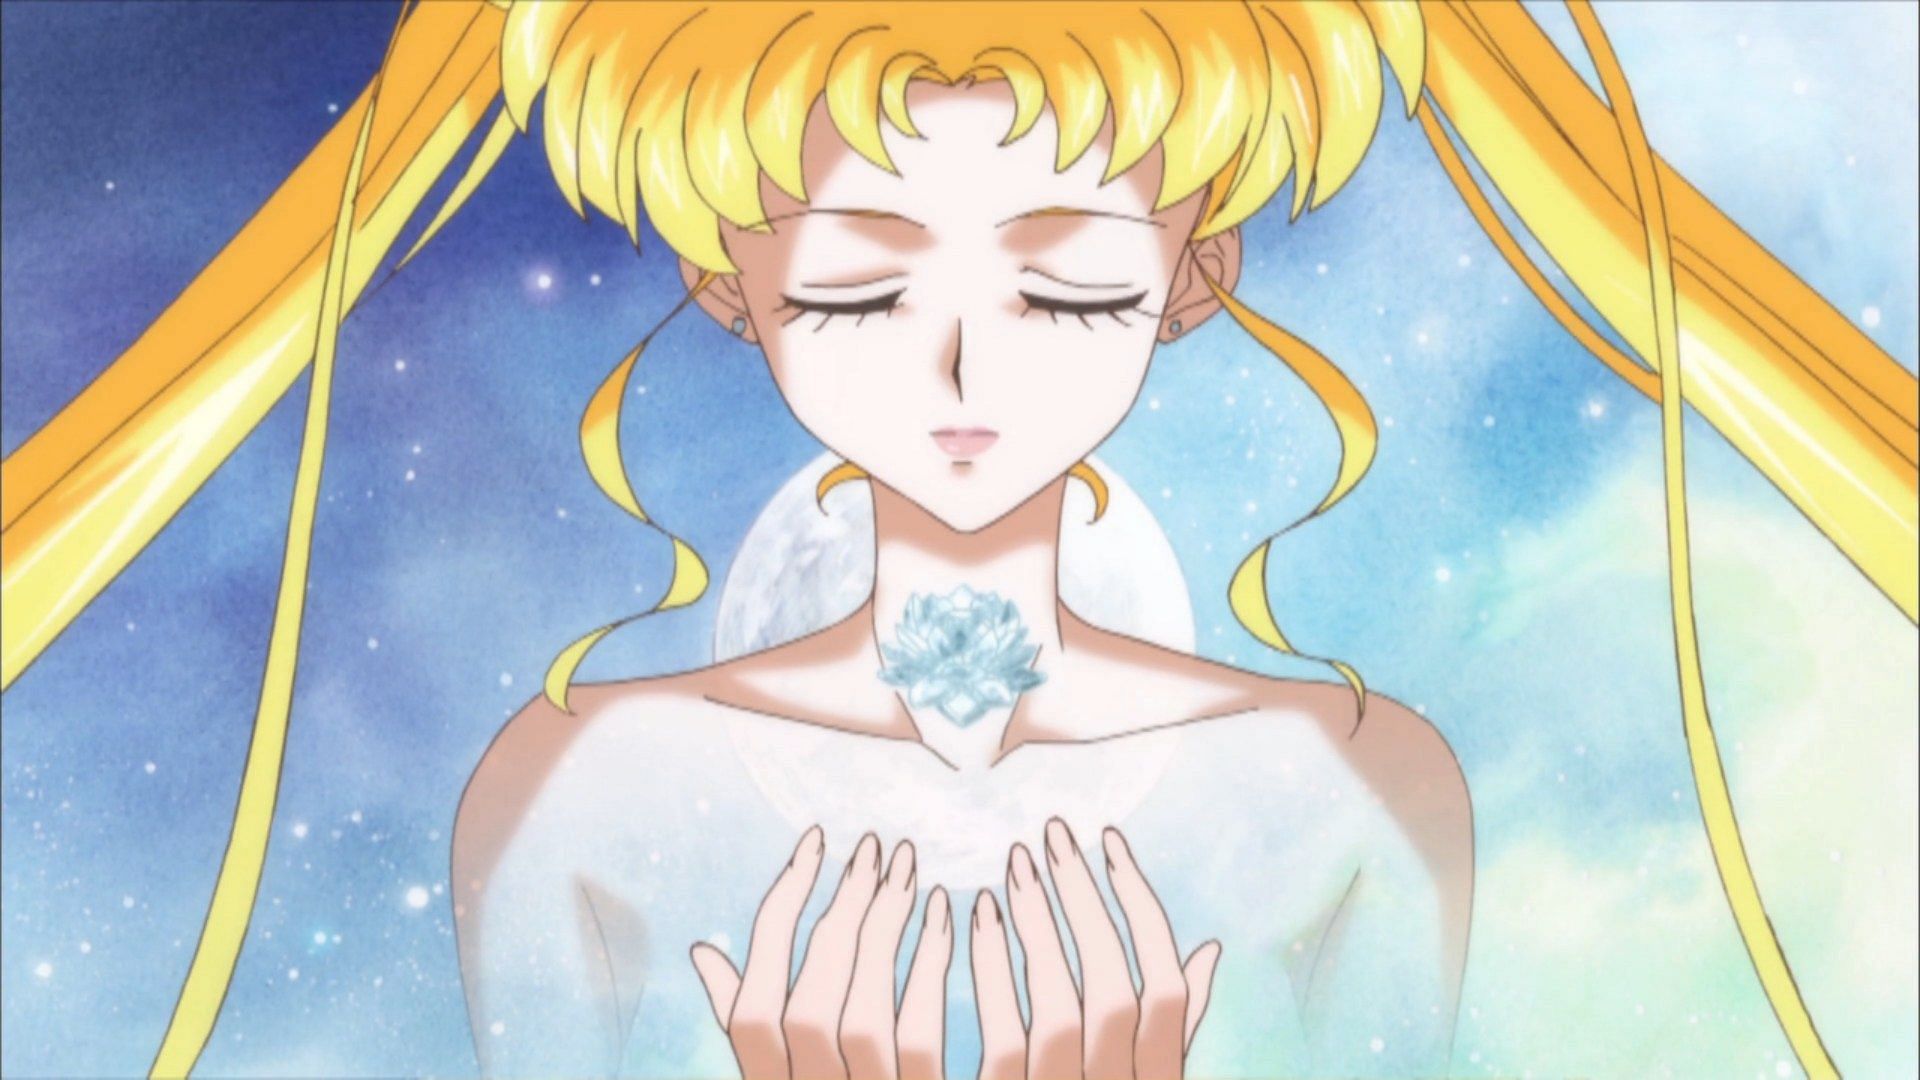 The Silver Crystal as seen in the Sailor Moon anime (Image Credits: Naoko Takeuchi/Nakayoshi, Viz Media, Sailor Moon)